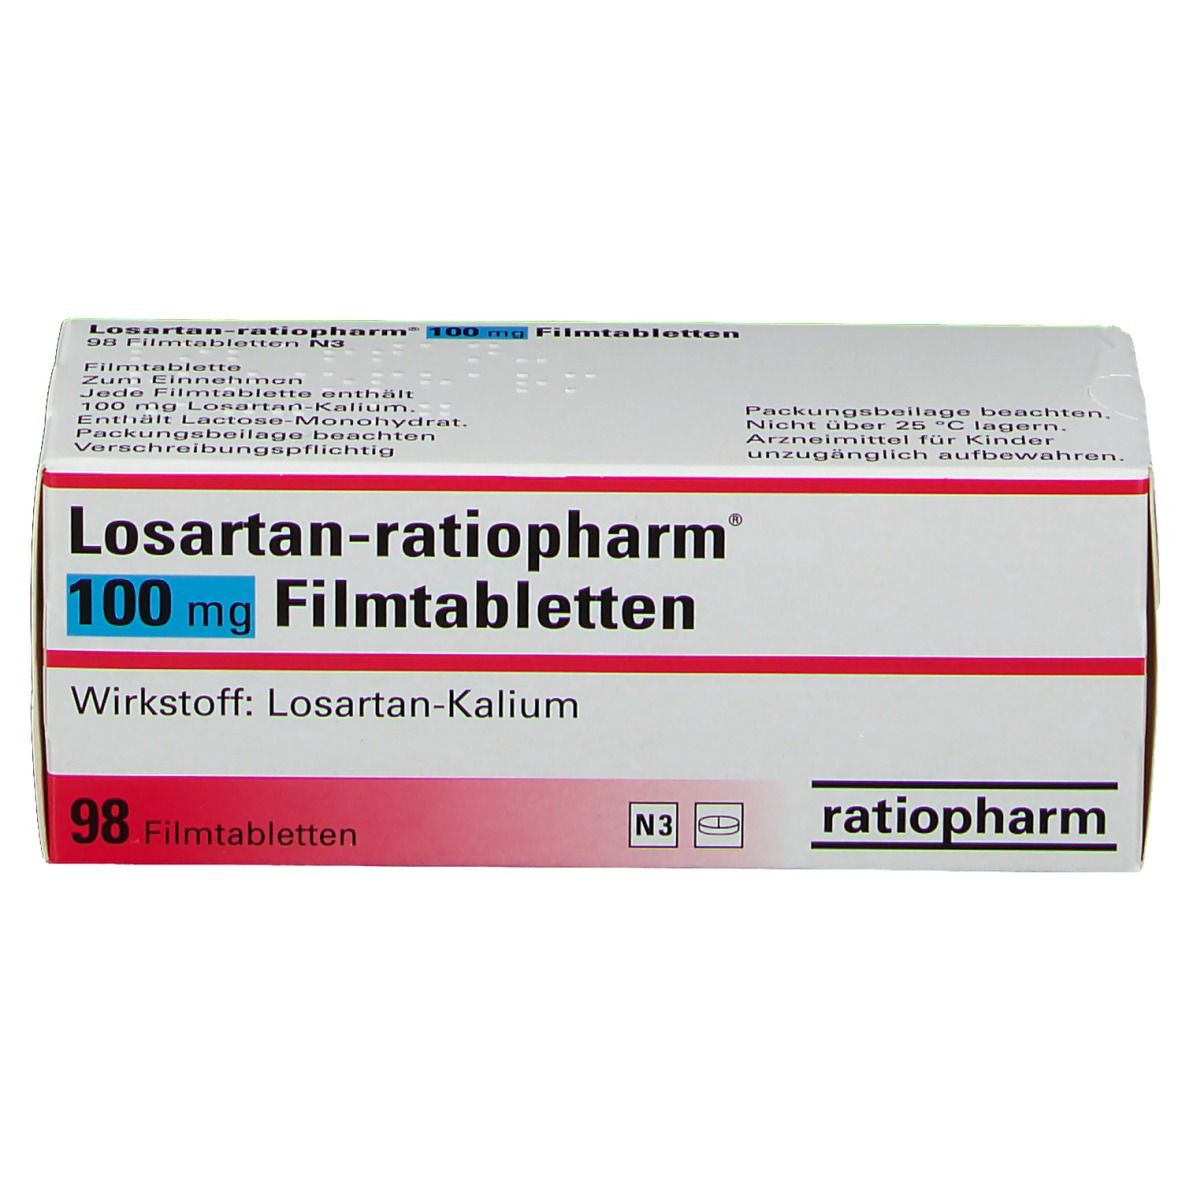 Losartan-ratiopharm® 100mg